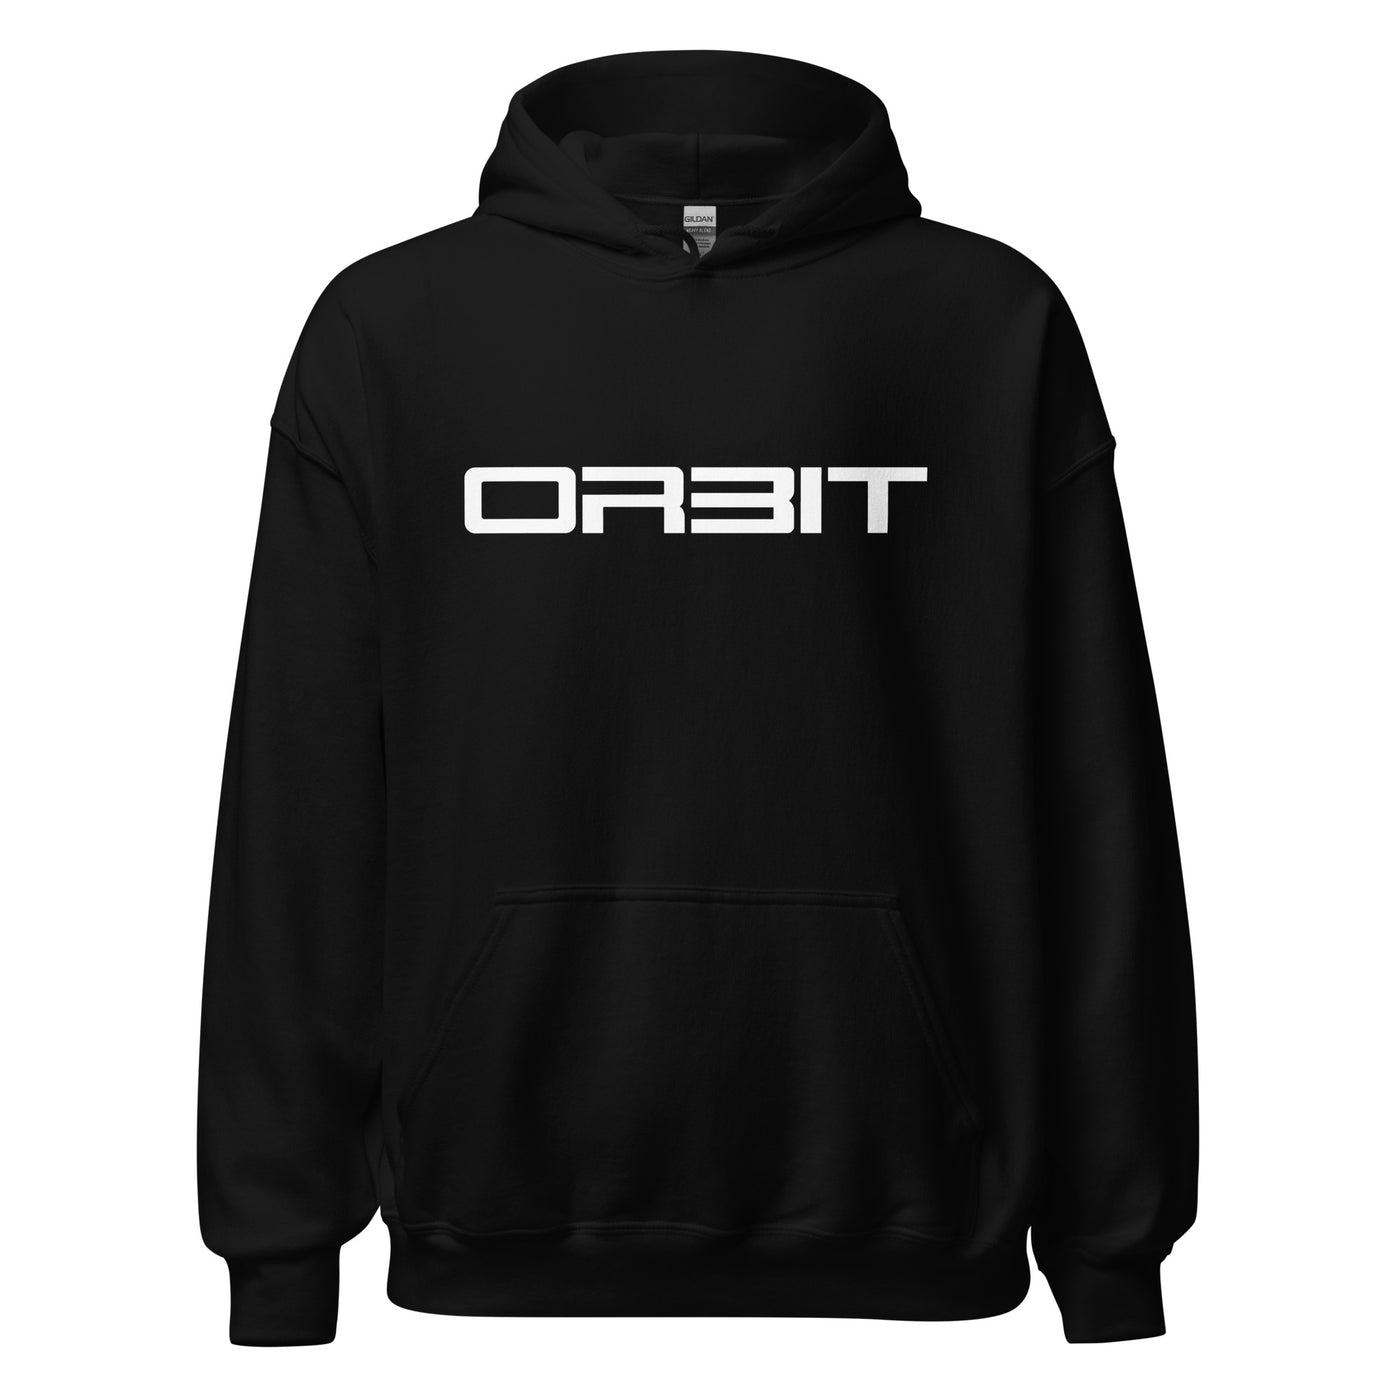 Orbit Unisex Hoodie